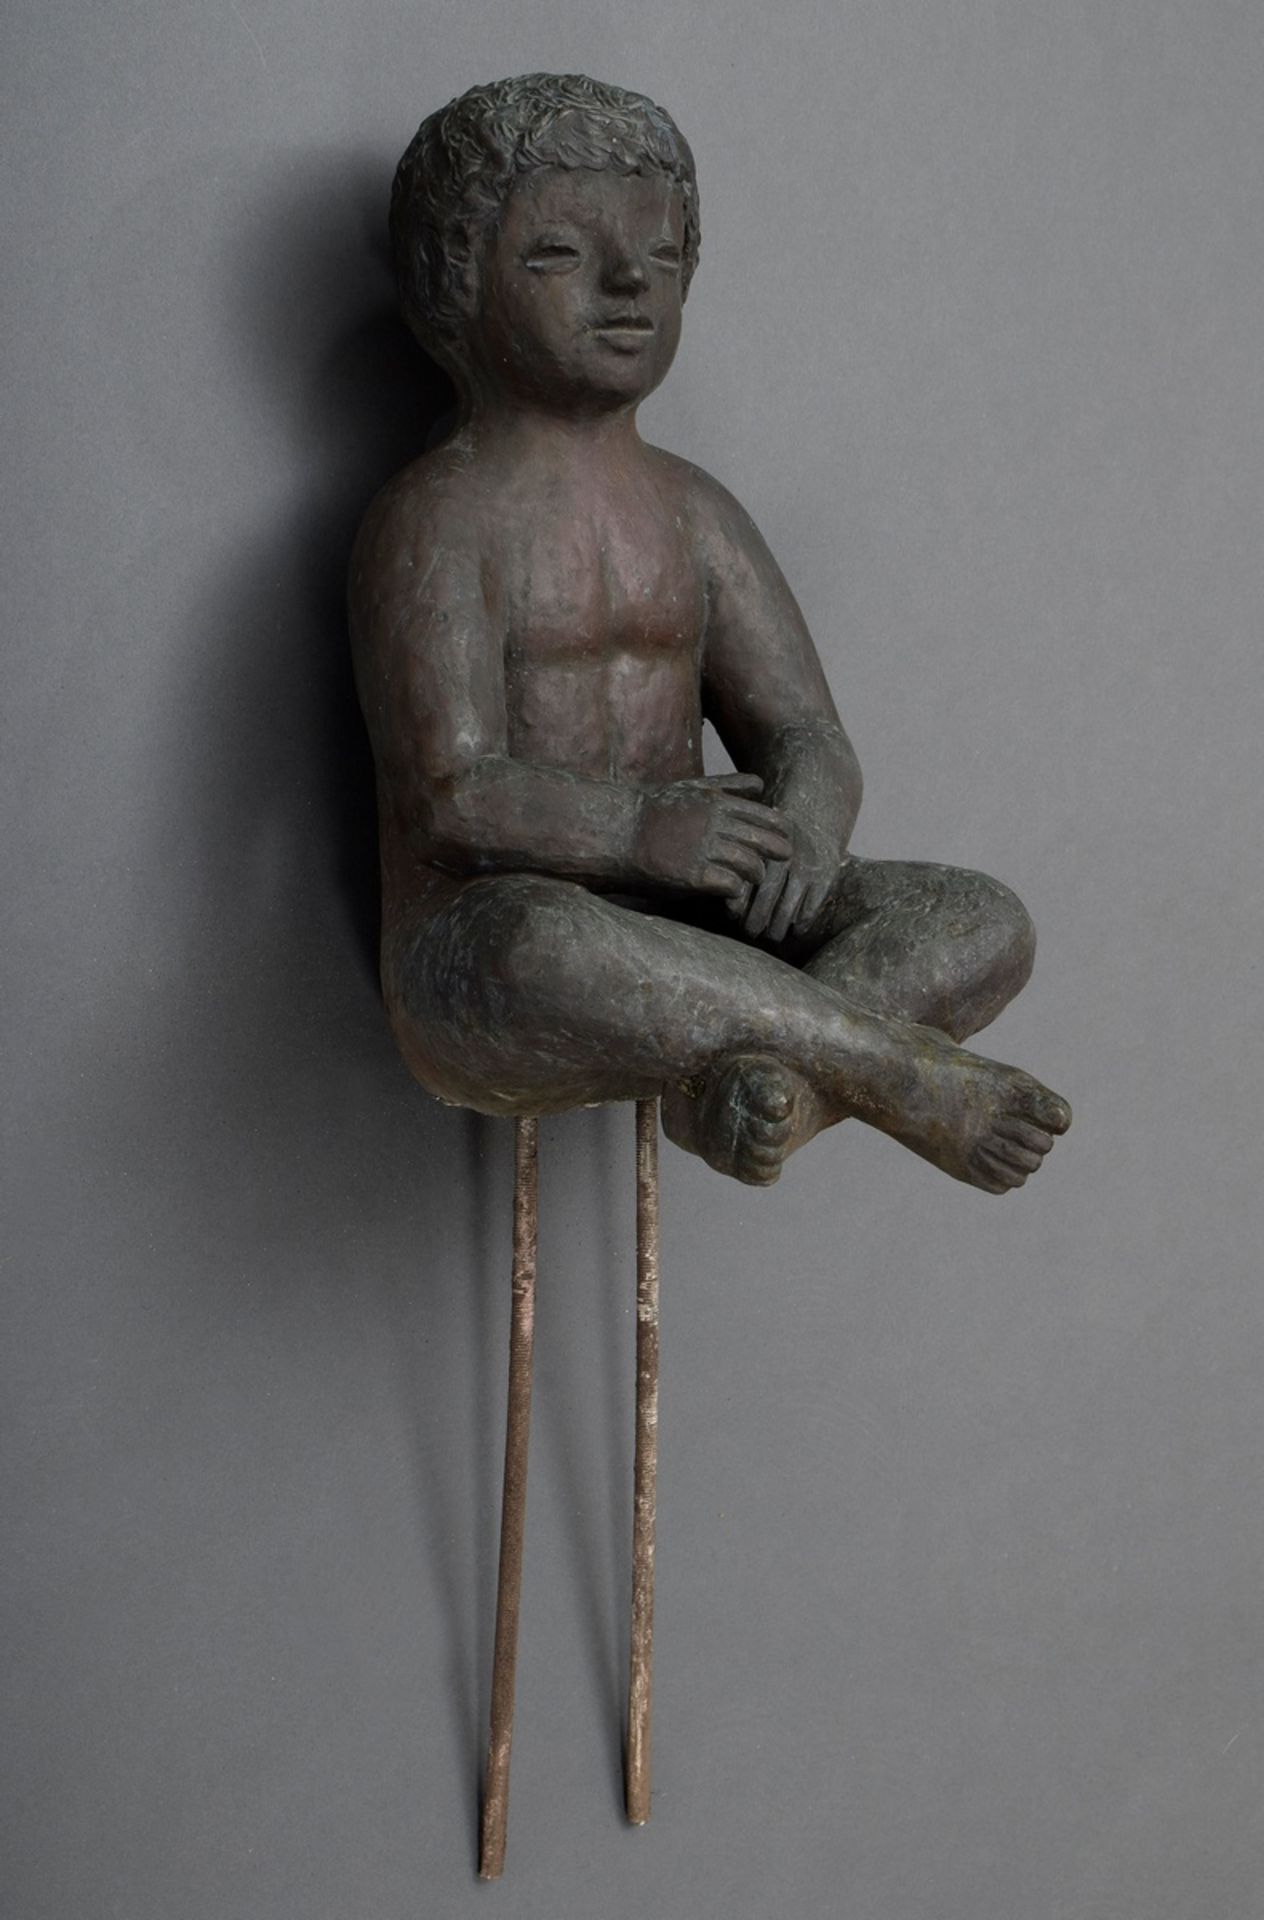 Fleer, Fritz (1921-1997) "Sitting Boy" 1993, bronze, verso sign./date, h. 44cm, weathering patina, 